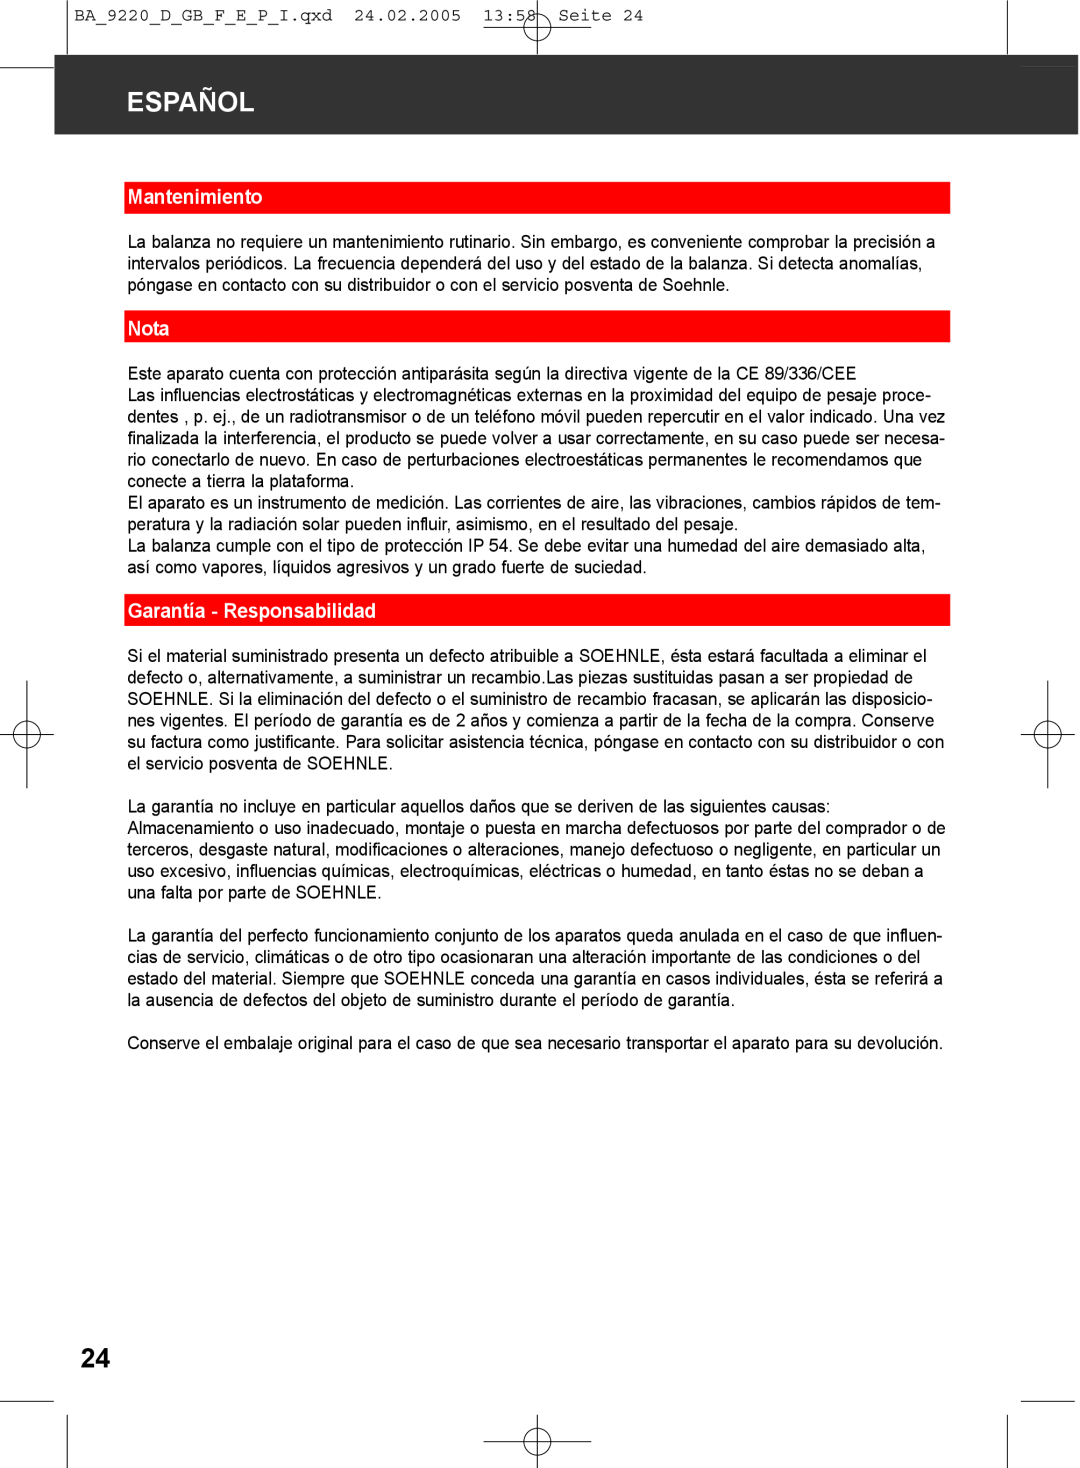 Soehnle 9220 manual Mantenimiento, Nota, Garantía - Responsabilidad, Español 